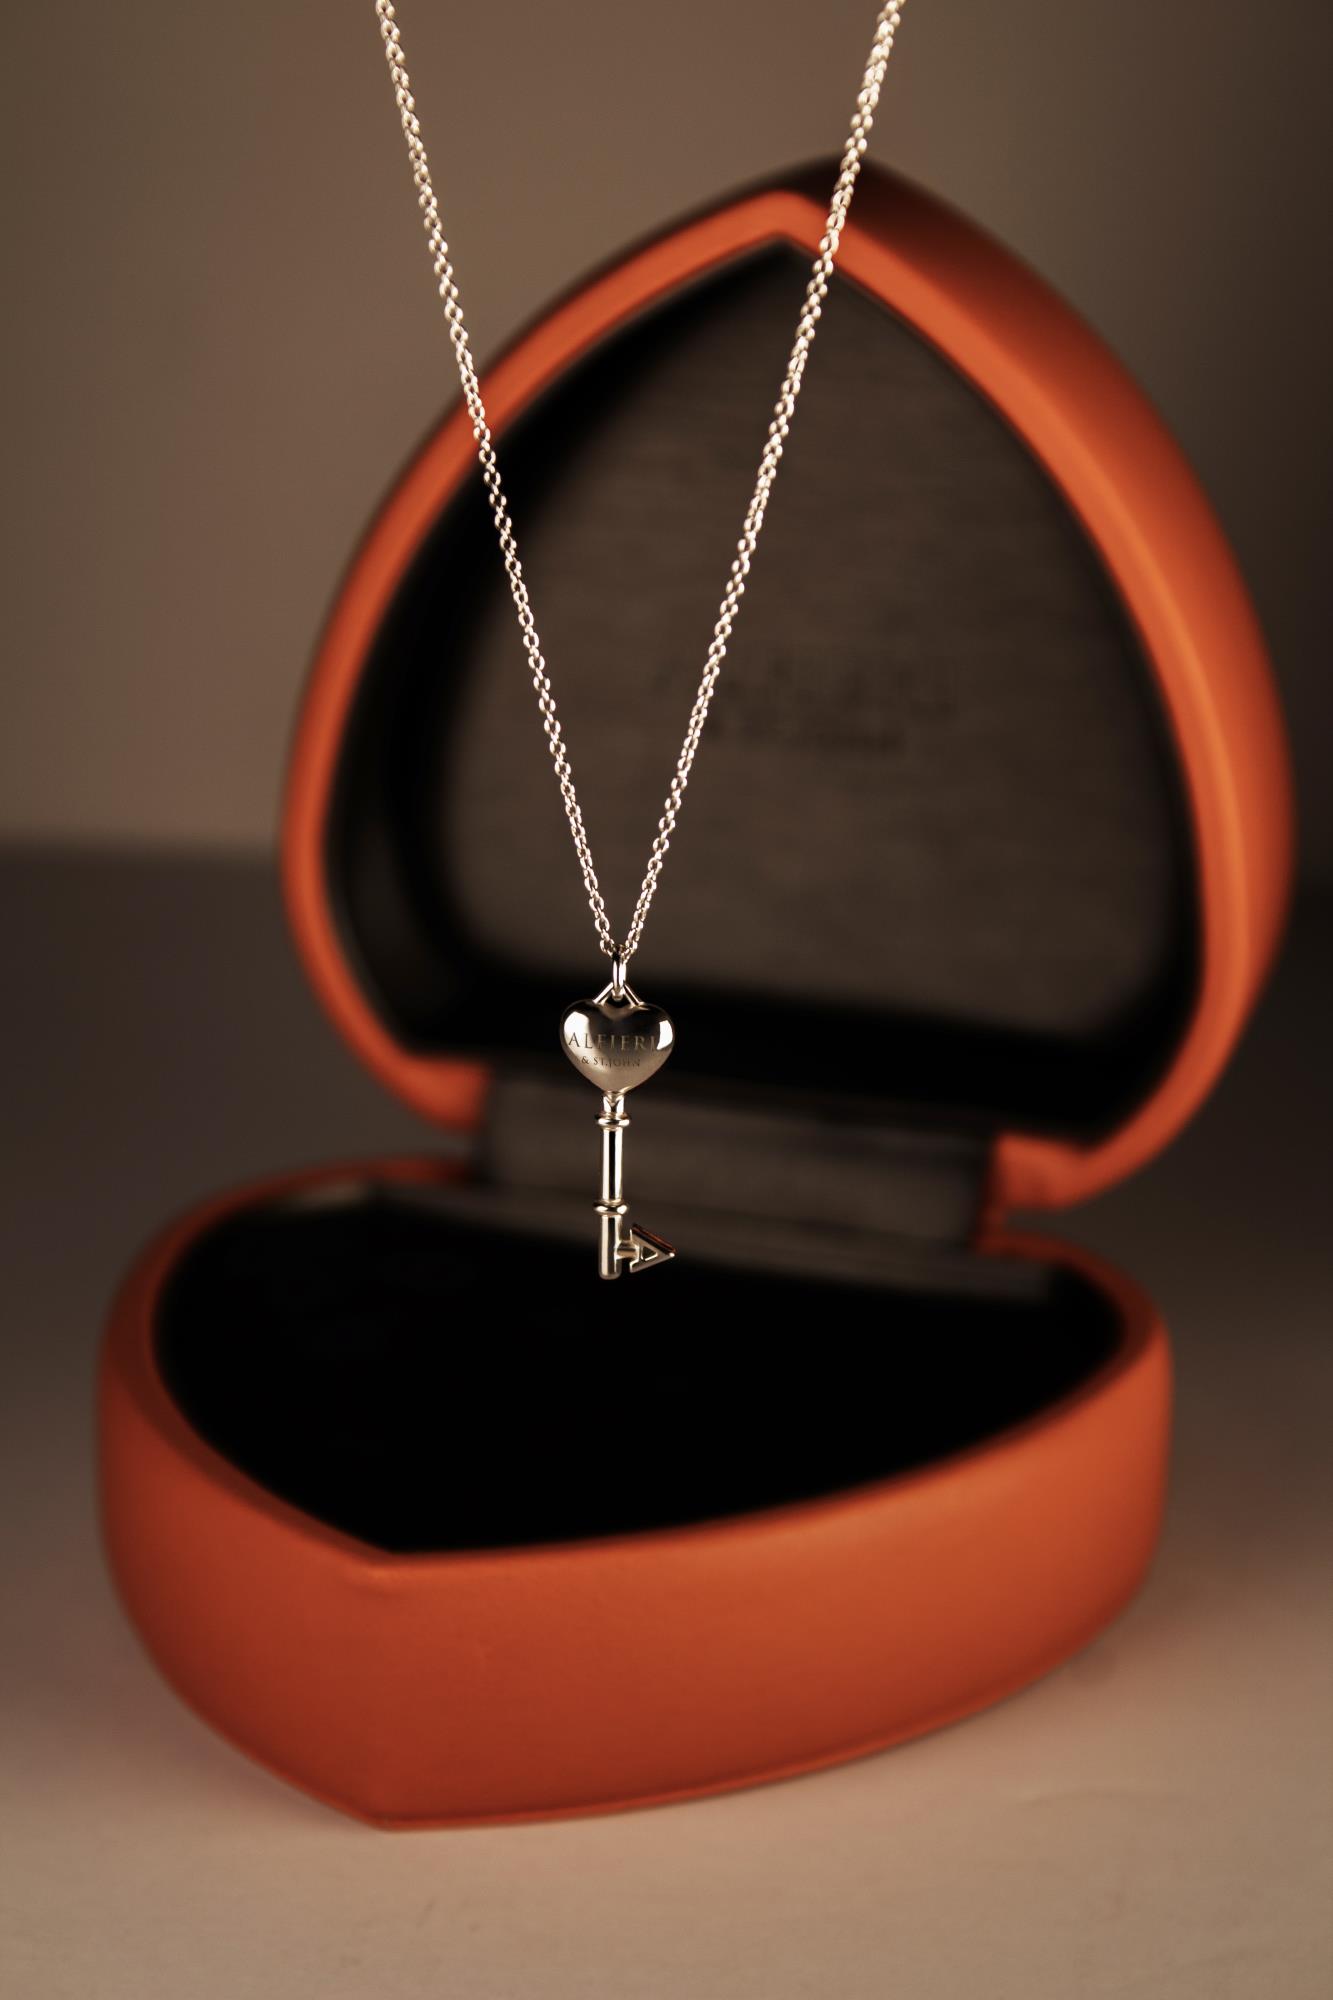 Long Necklace with key pendant in silver - ALFIERI & ST. JOHN 925